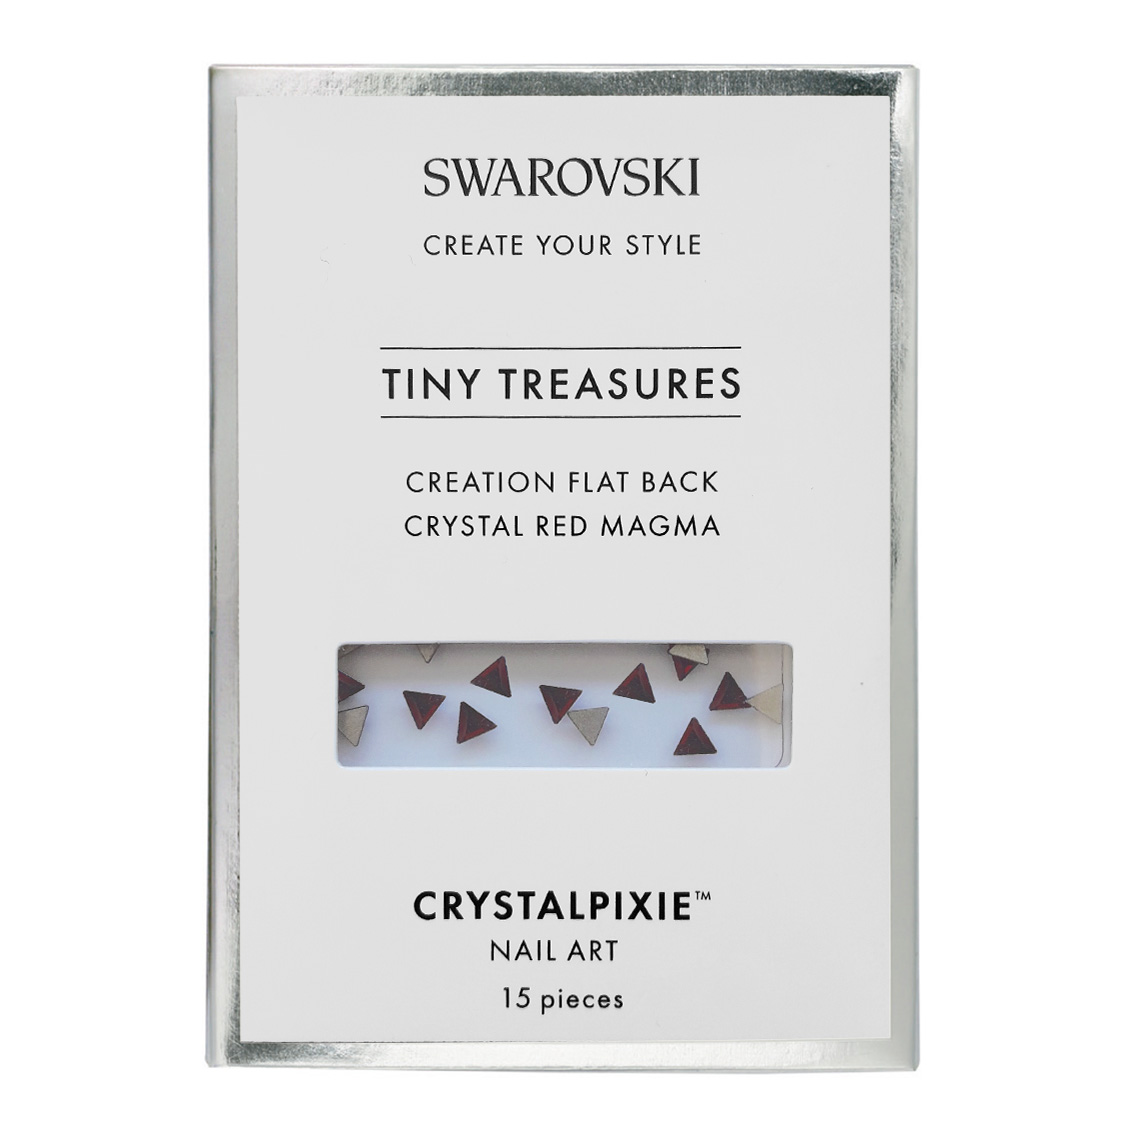 Creation Flat Back - Kristall Red Magma 15 Stück - Swarovski® Tiny Treasures